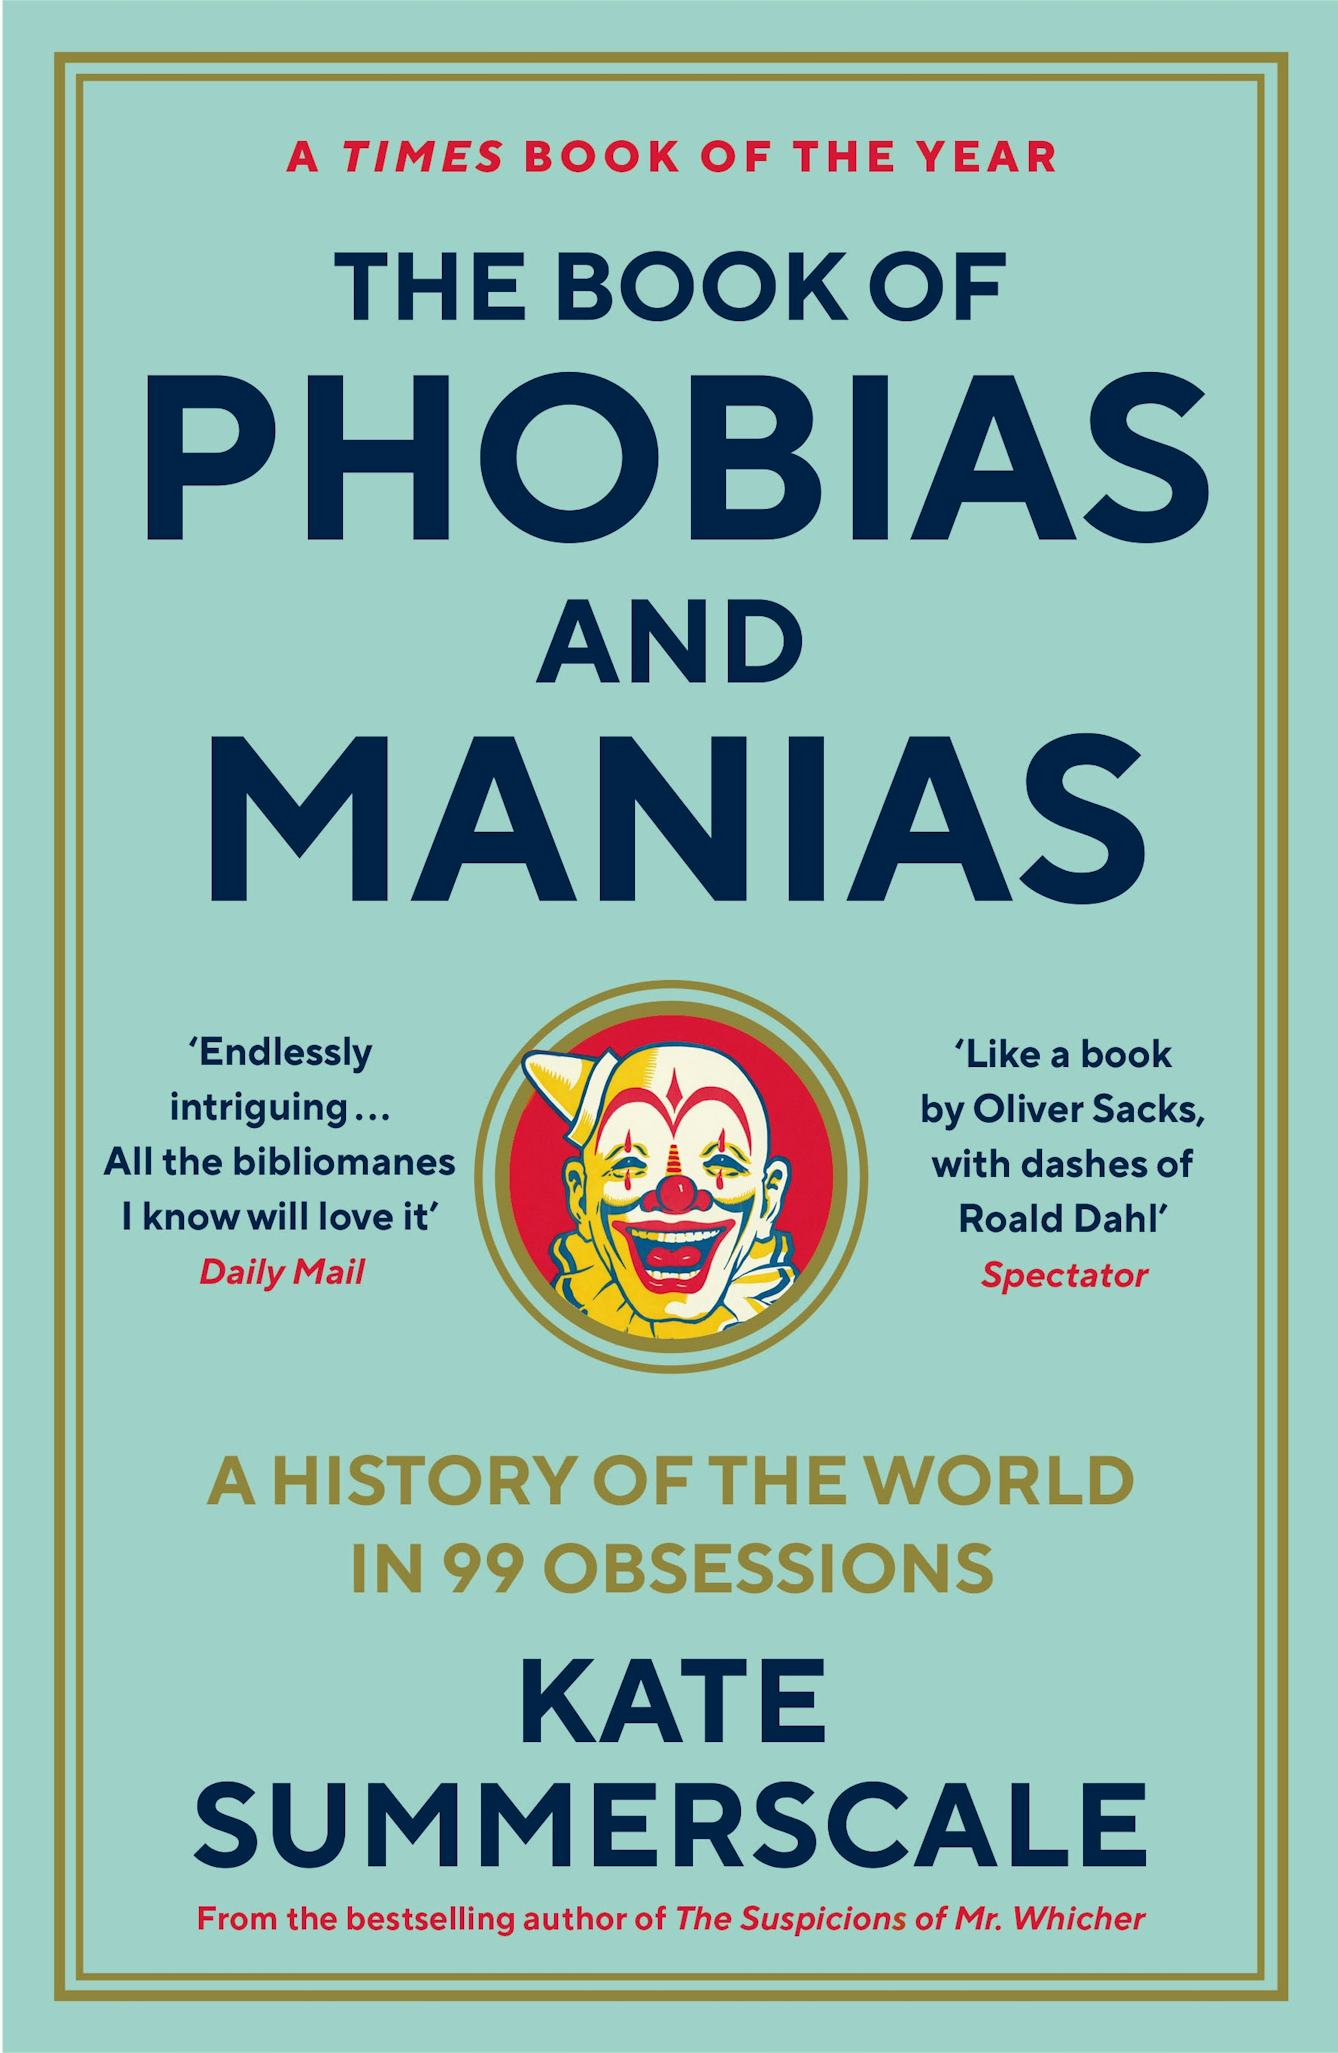 'The Book of Phobias and Manias' paperback book cover